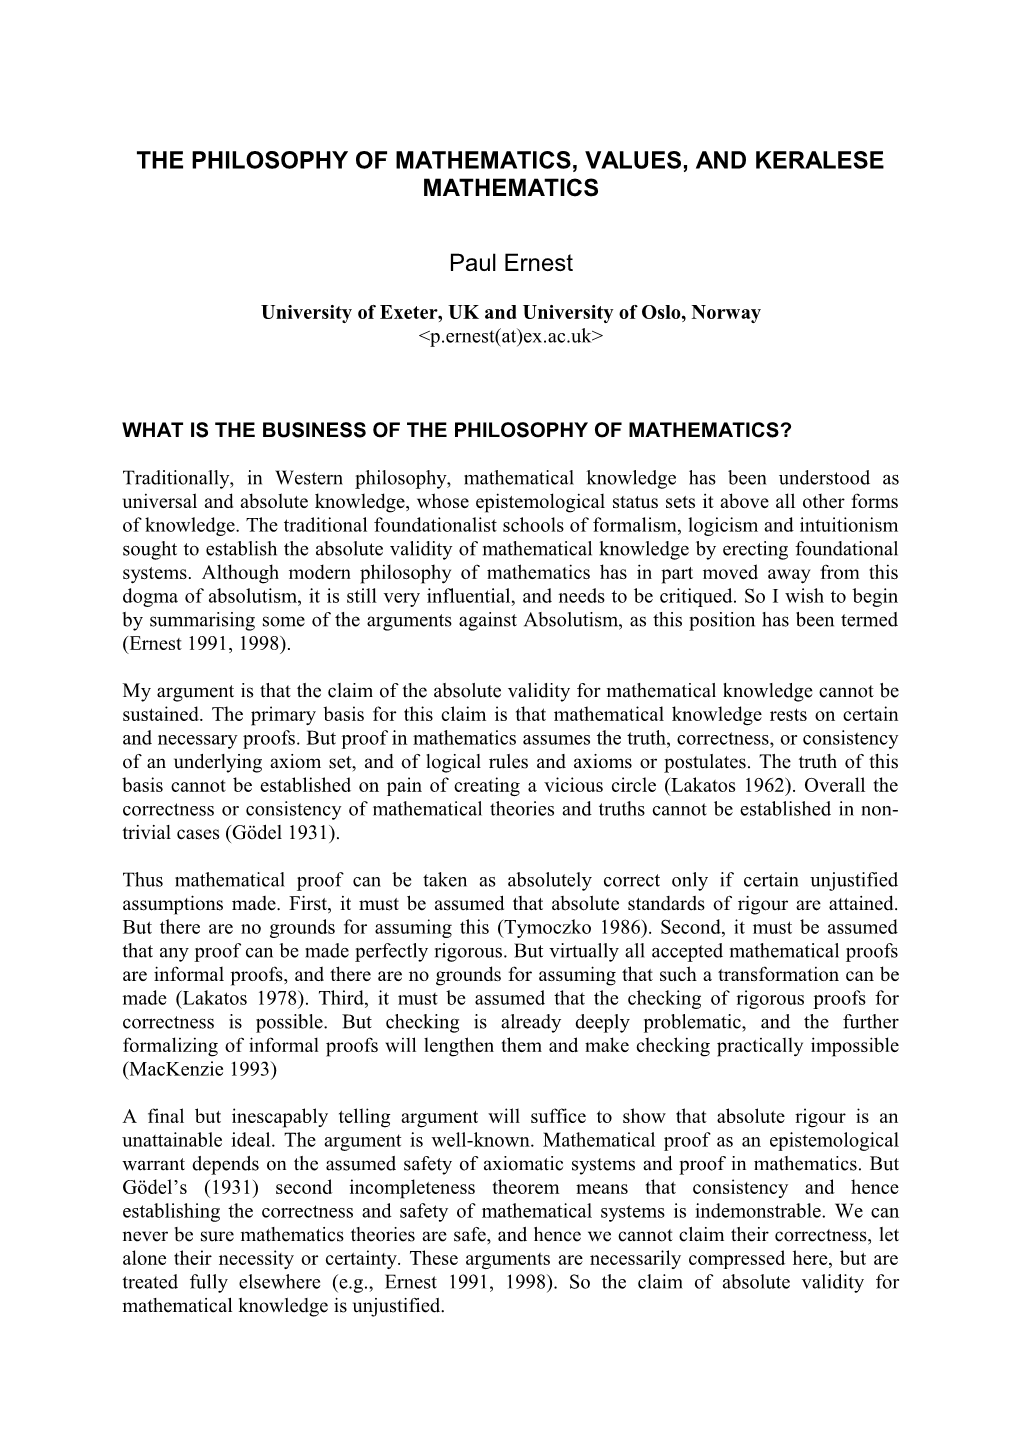 The Philosophy of Mathematics, Values, and Keralese Mathematics